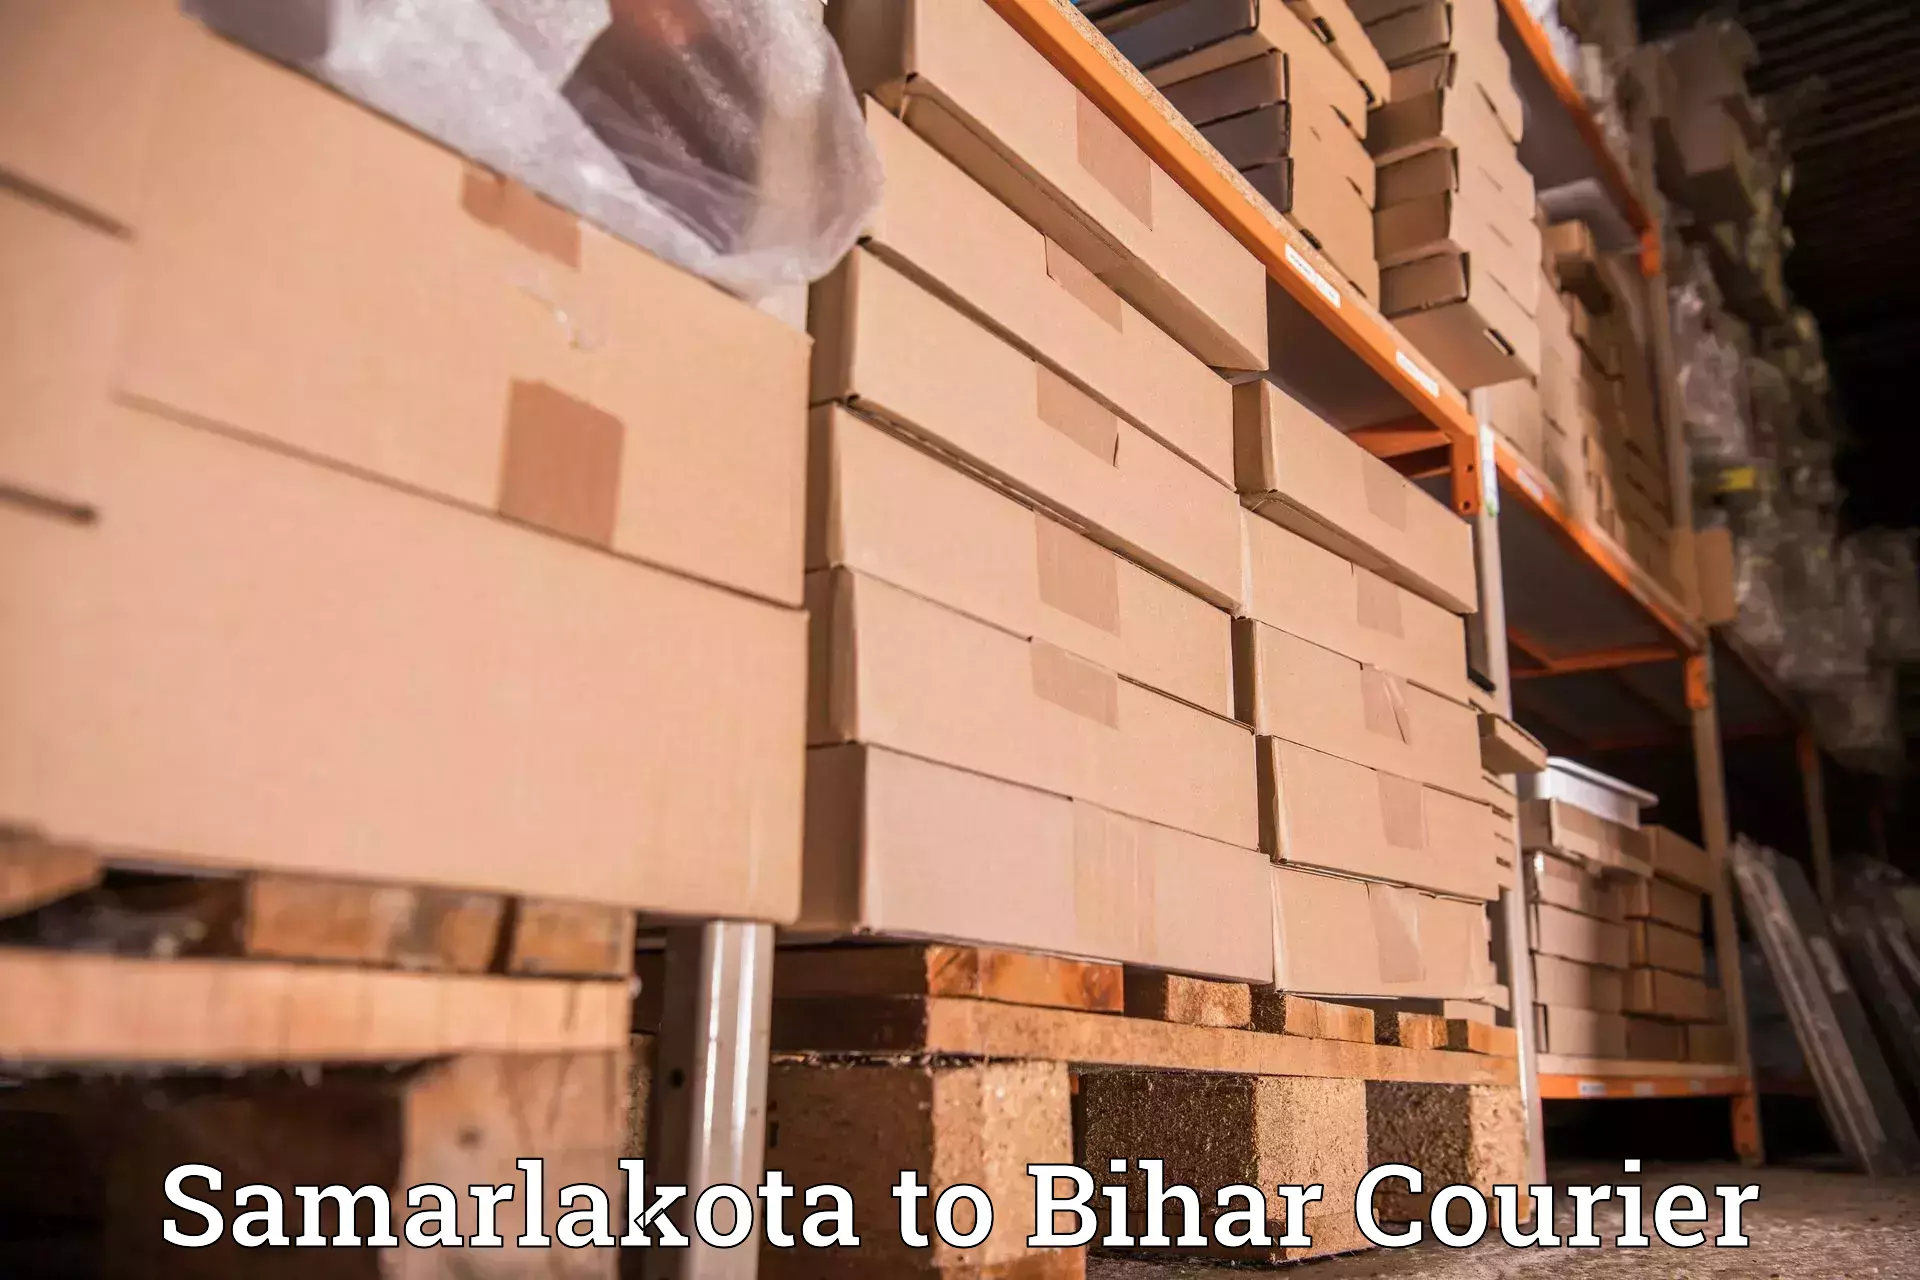 Courier service efficiency Samarlakota to Bikramganj